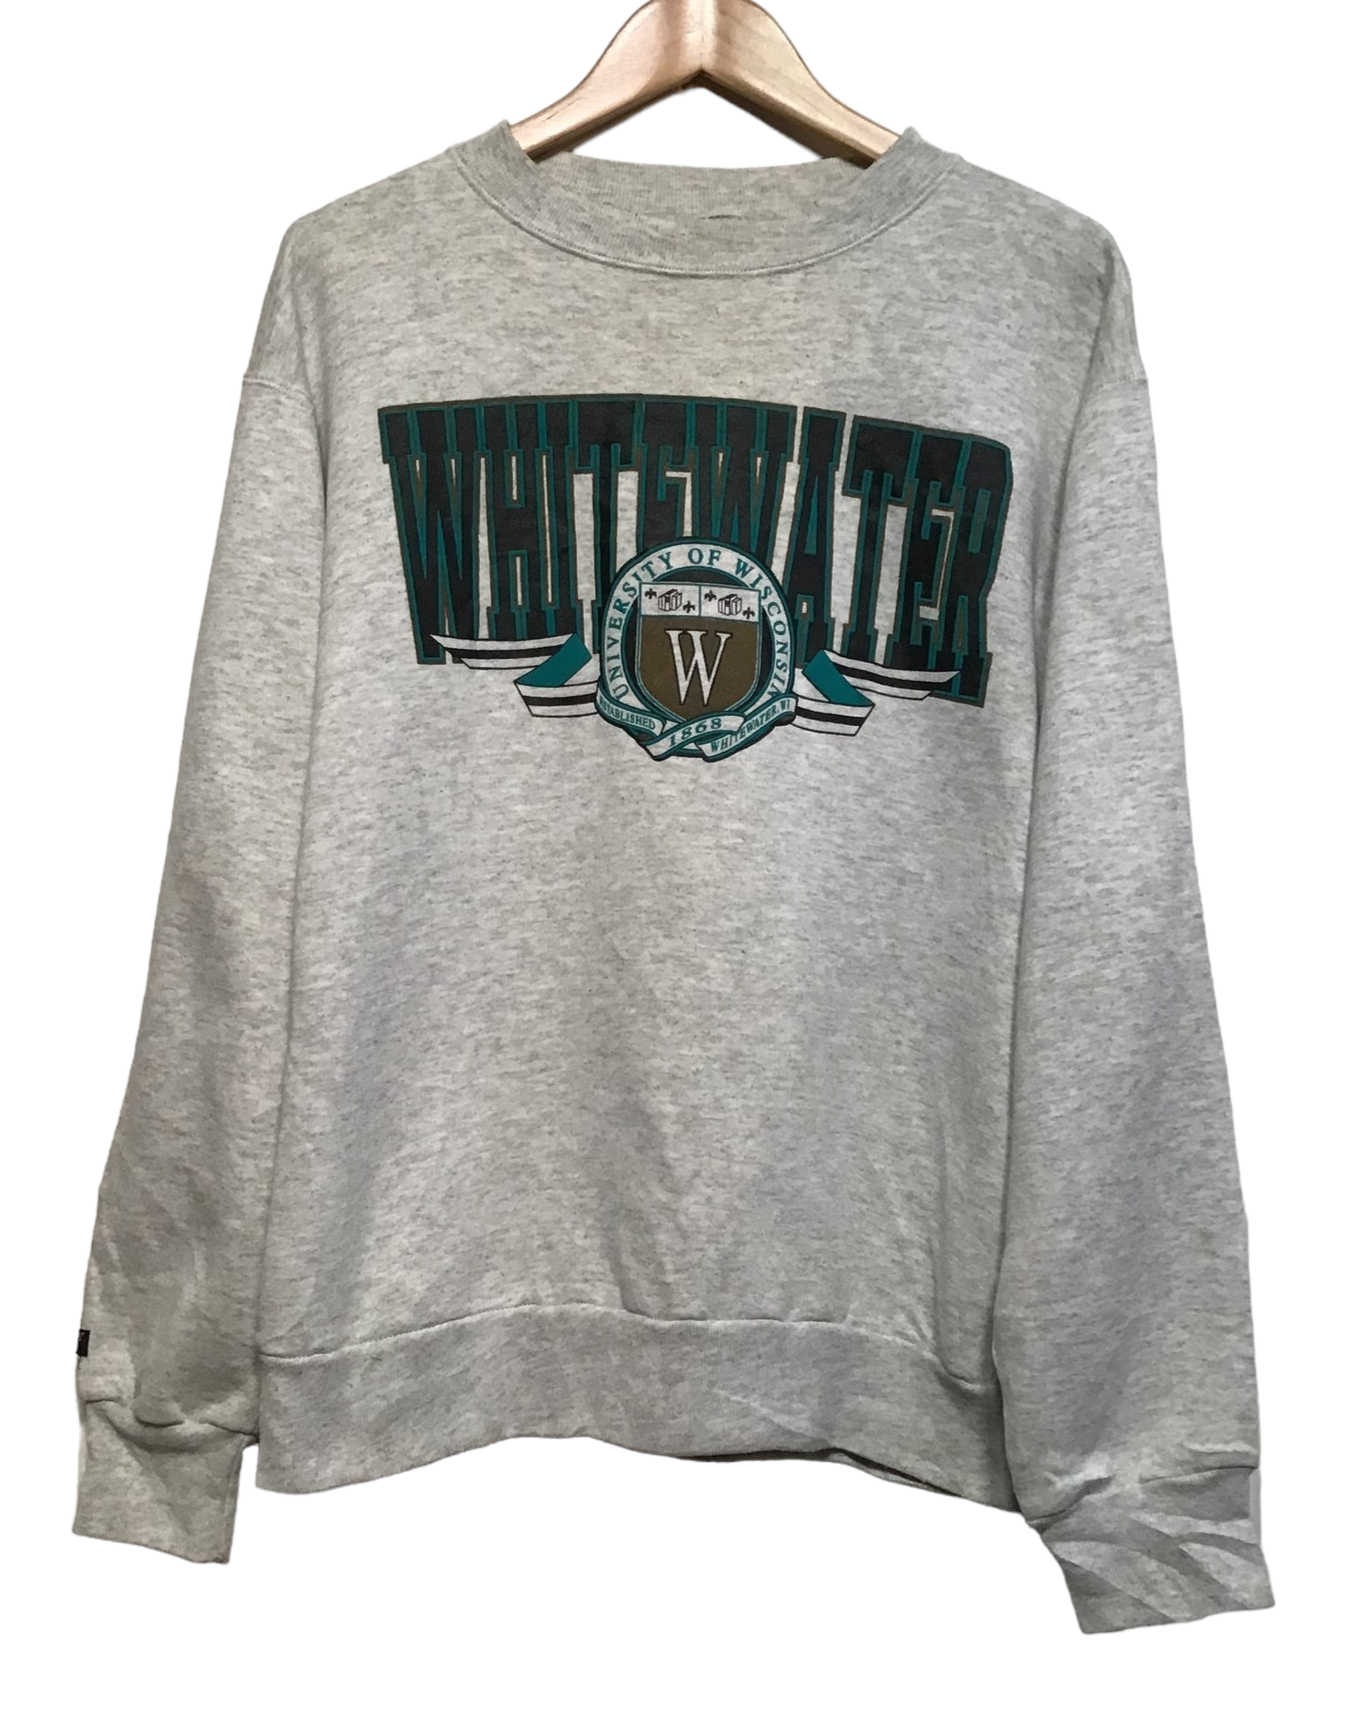 University Of Wisconsin Sweatshirt (Size M)